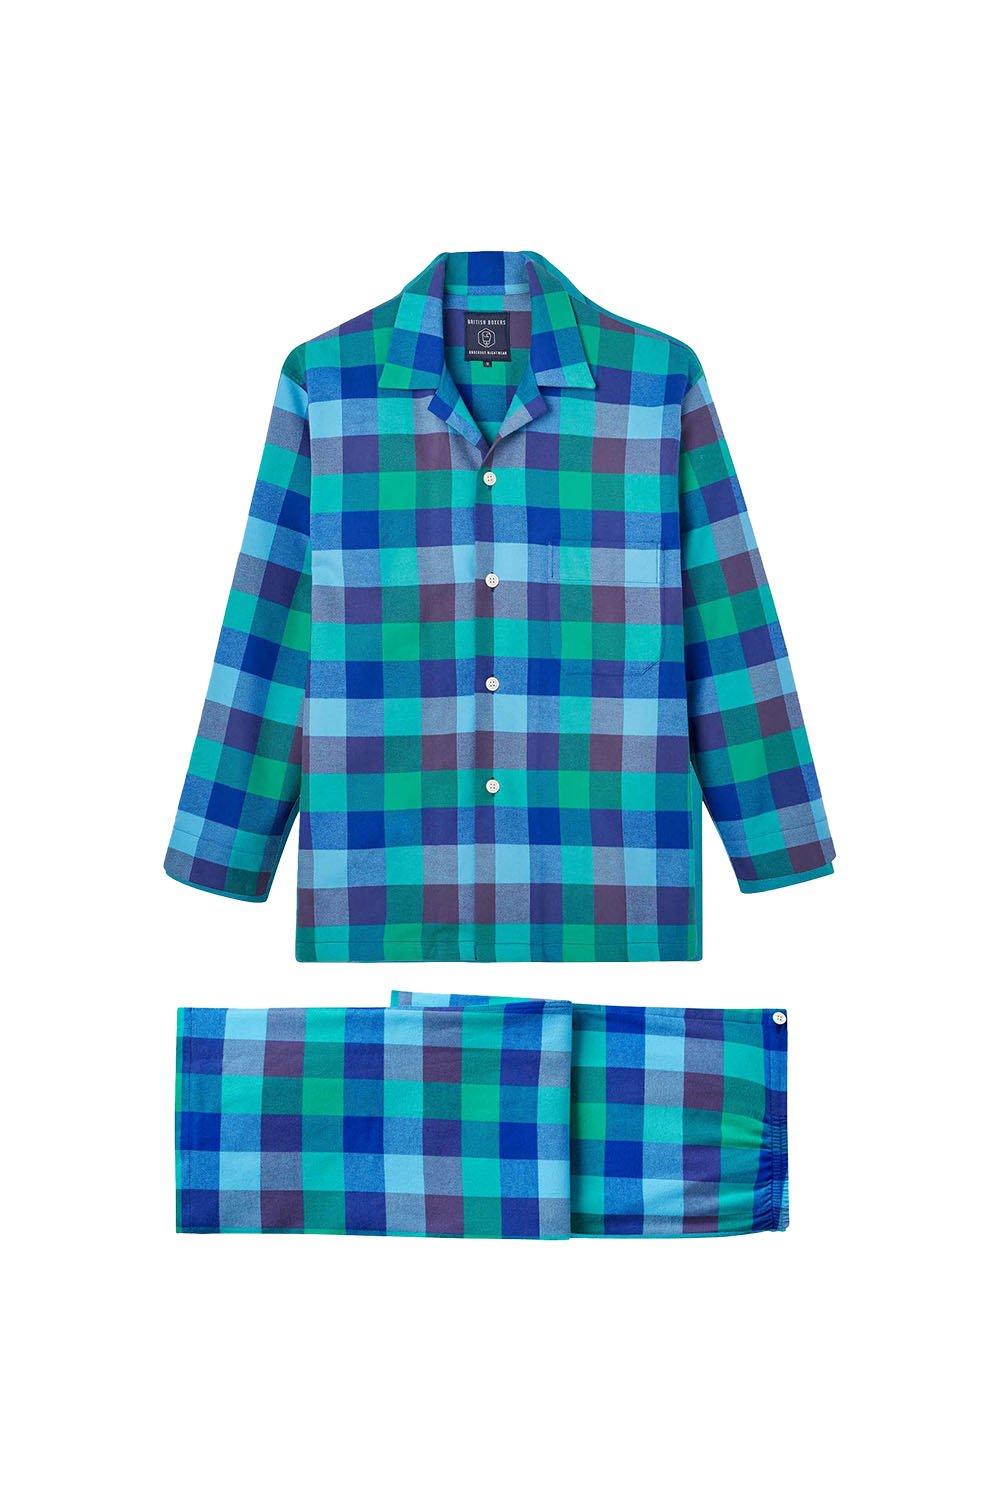 'Shire Square' Blue Check Brushed Cotton Pyjama Set